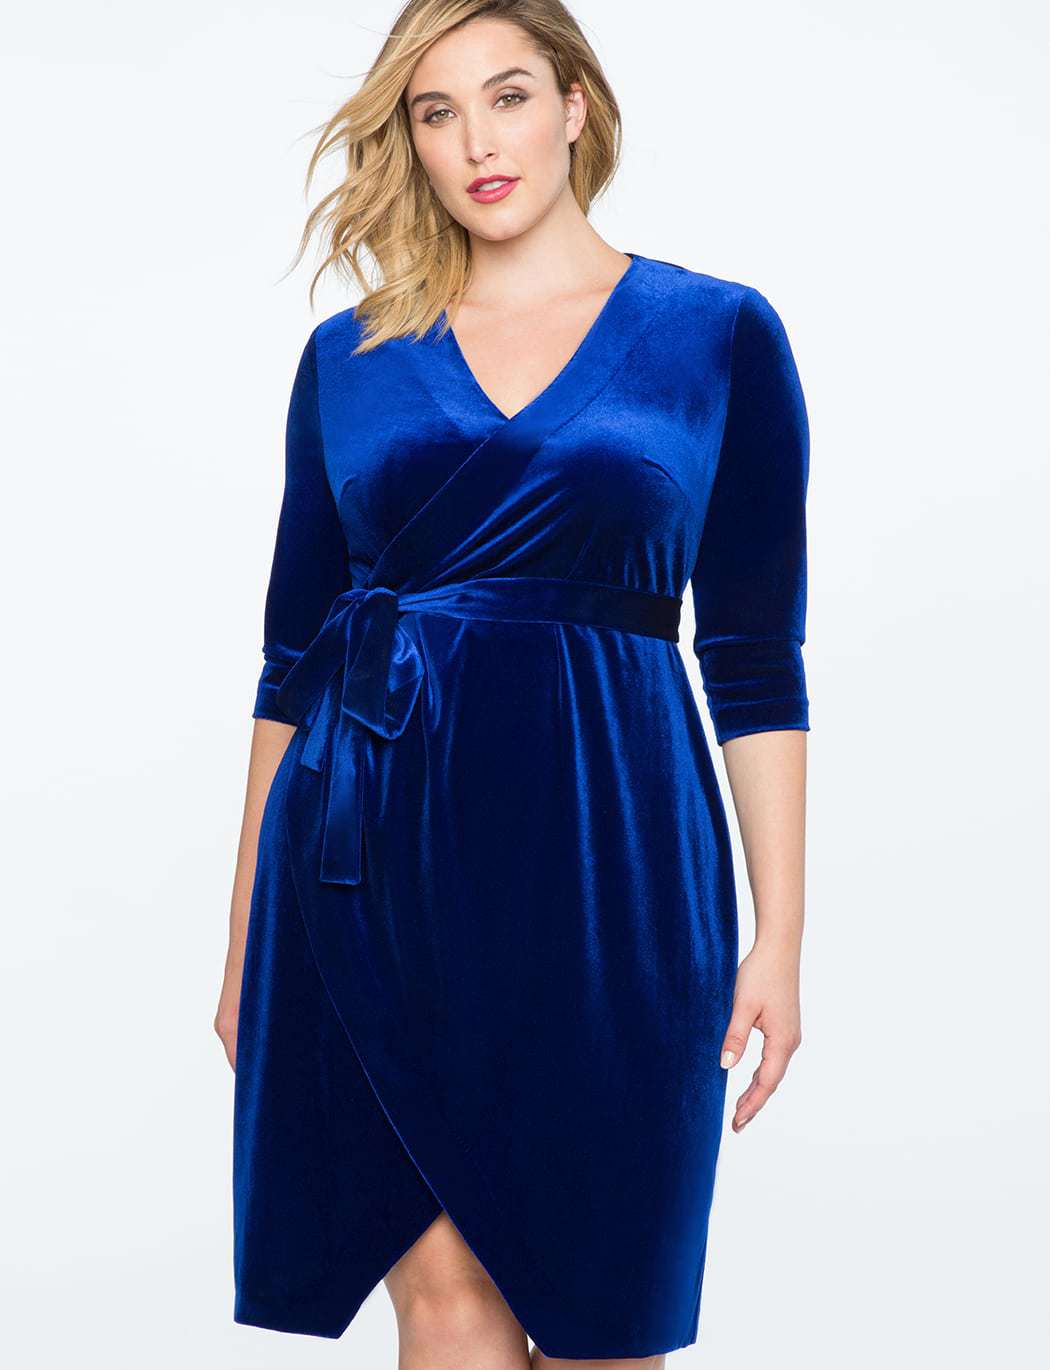 Eloquii Blue Velvet Plus Size Wrap Dress Wardrobe Oxygen